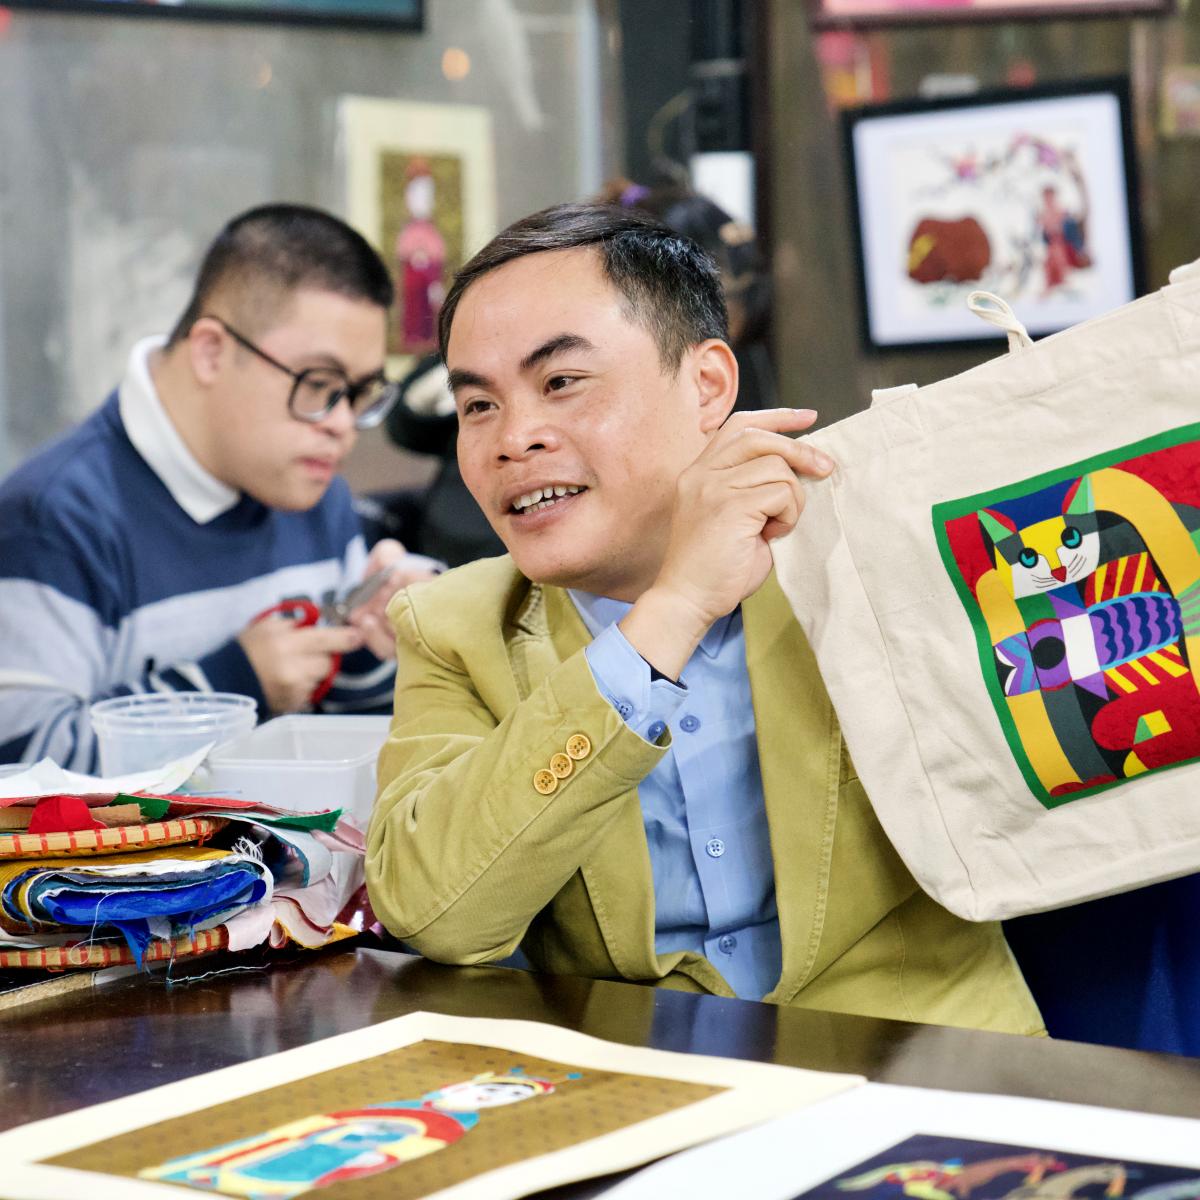 Mr. Le Viet Cuong, the 48-year-old social entrepreneur, artist, and co-founder of Vun Art